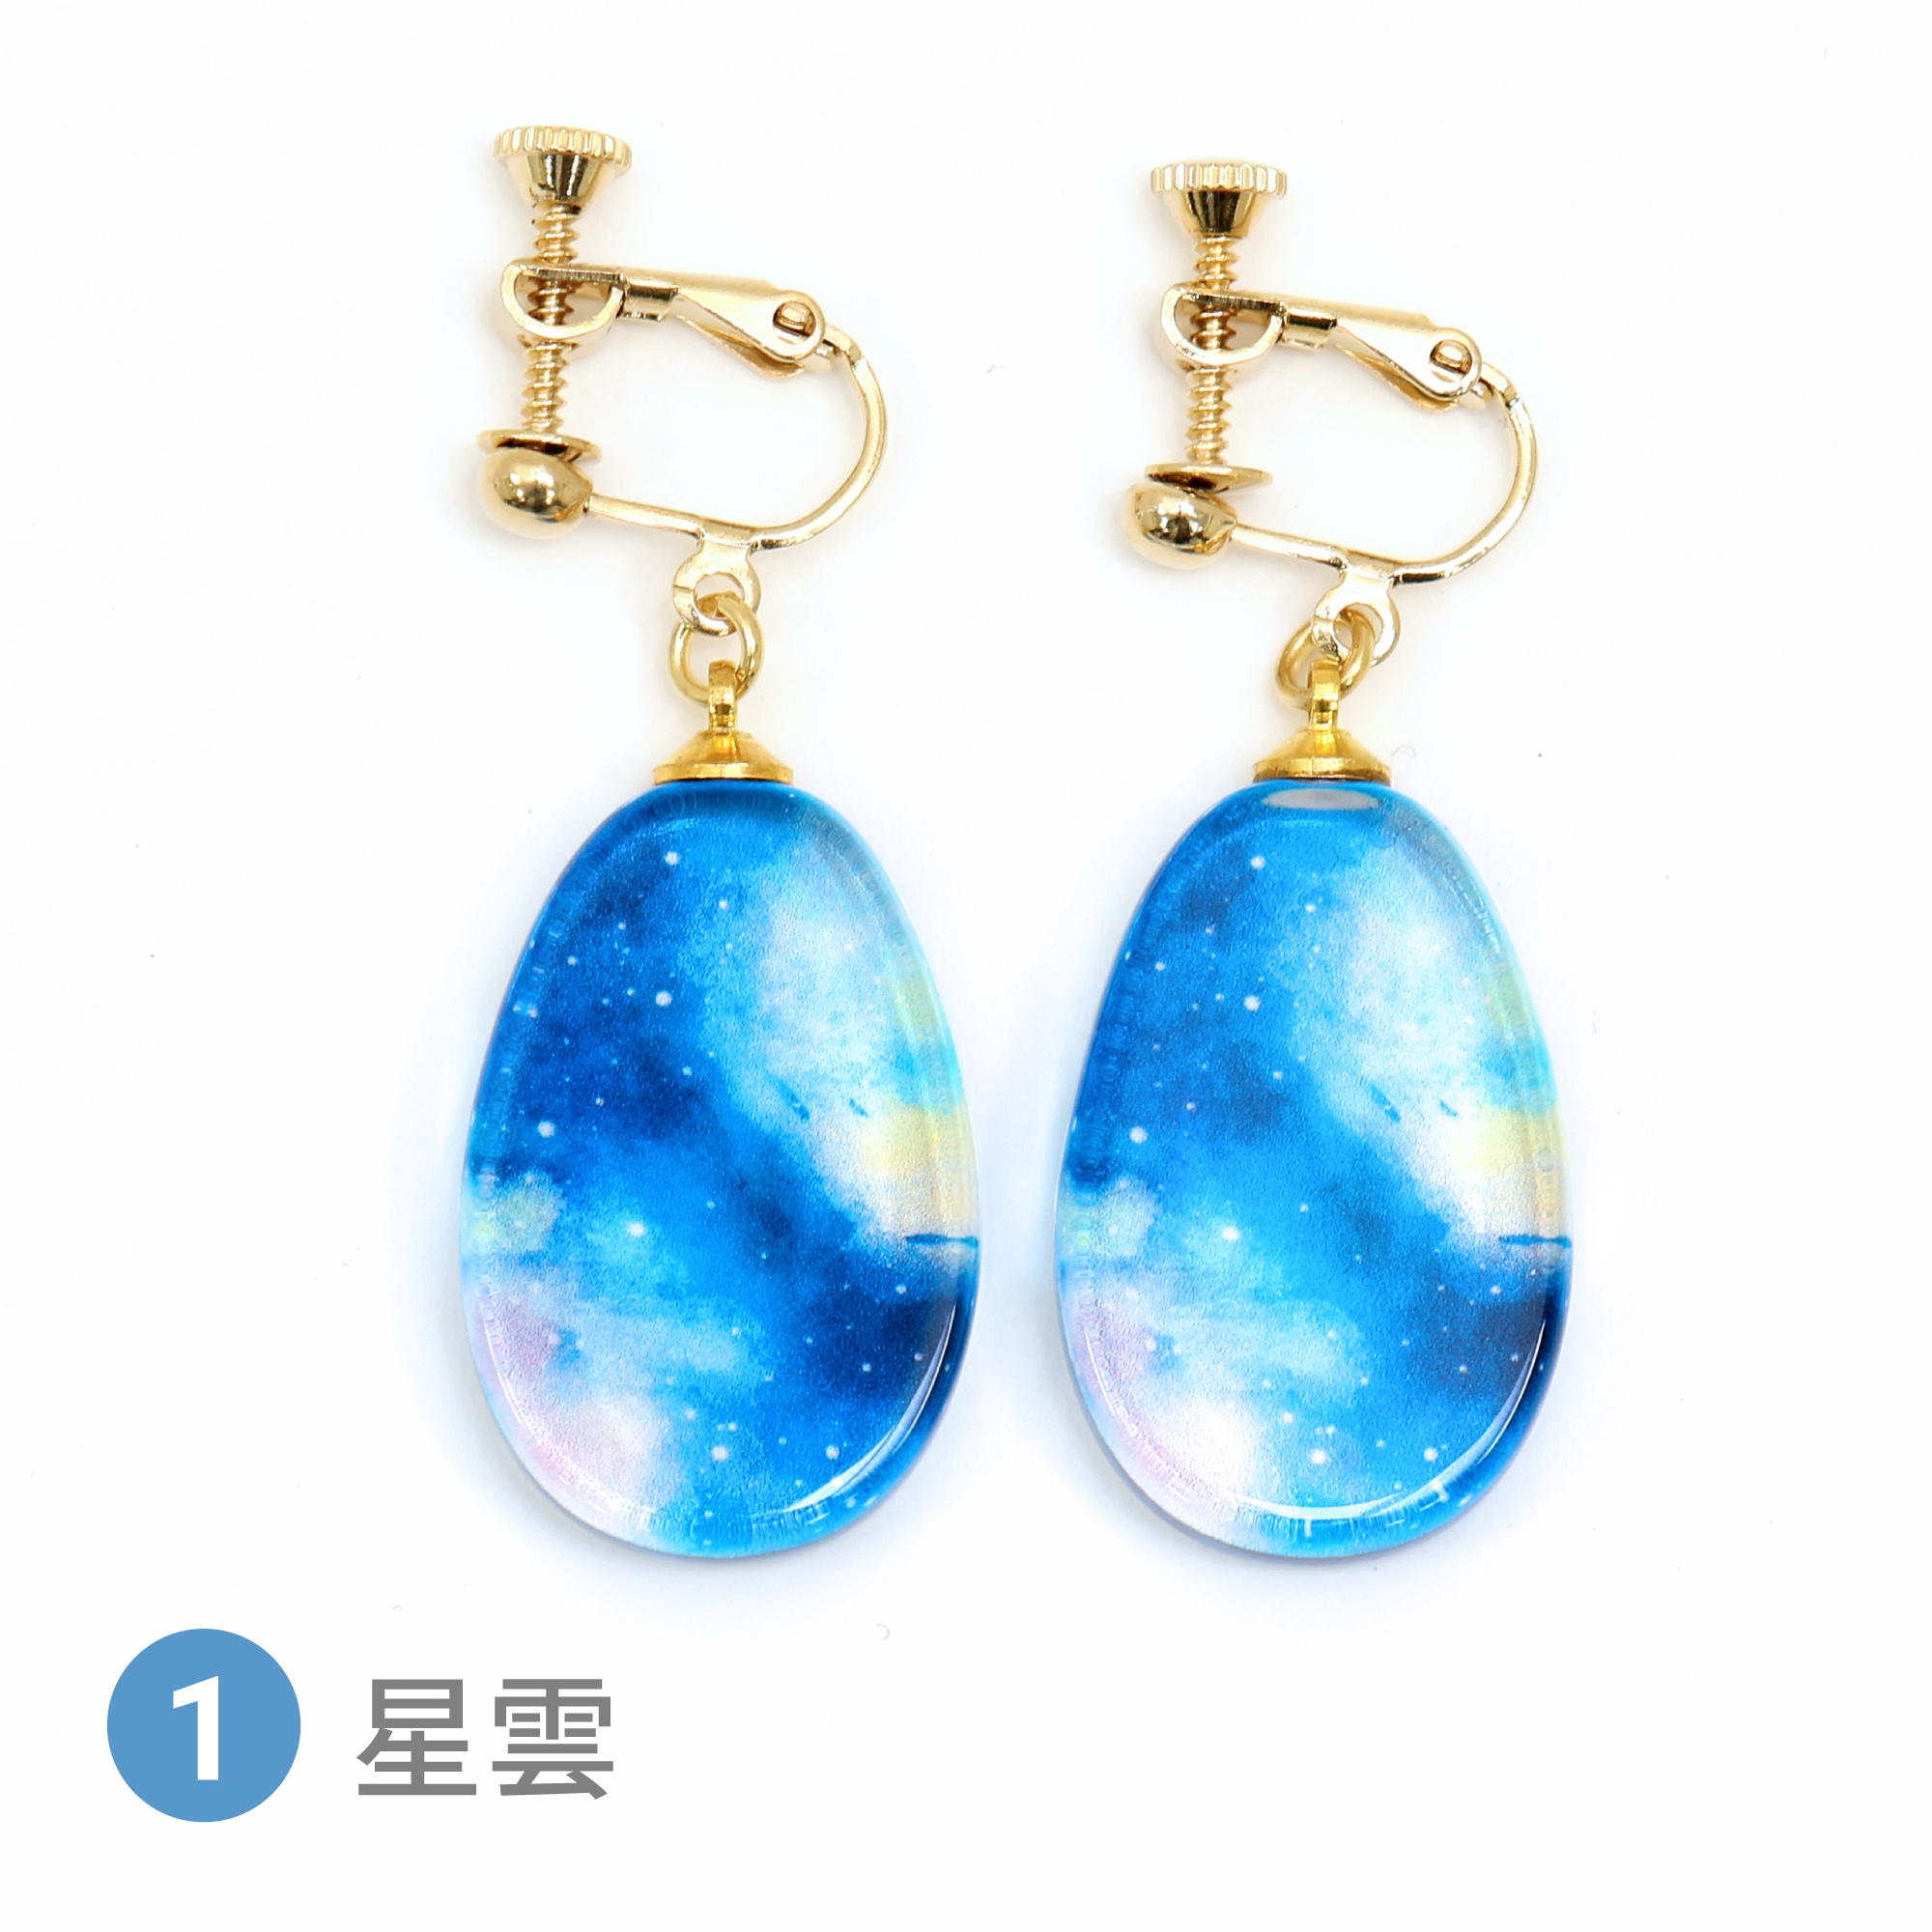 Glass accessories Earring STARRY SKY nebula drop shape